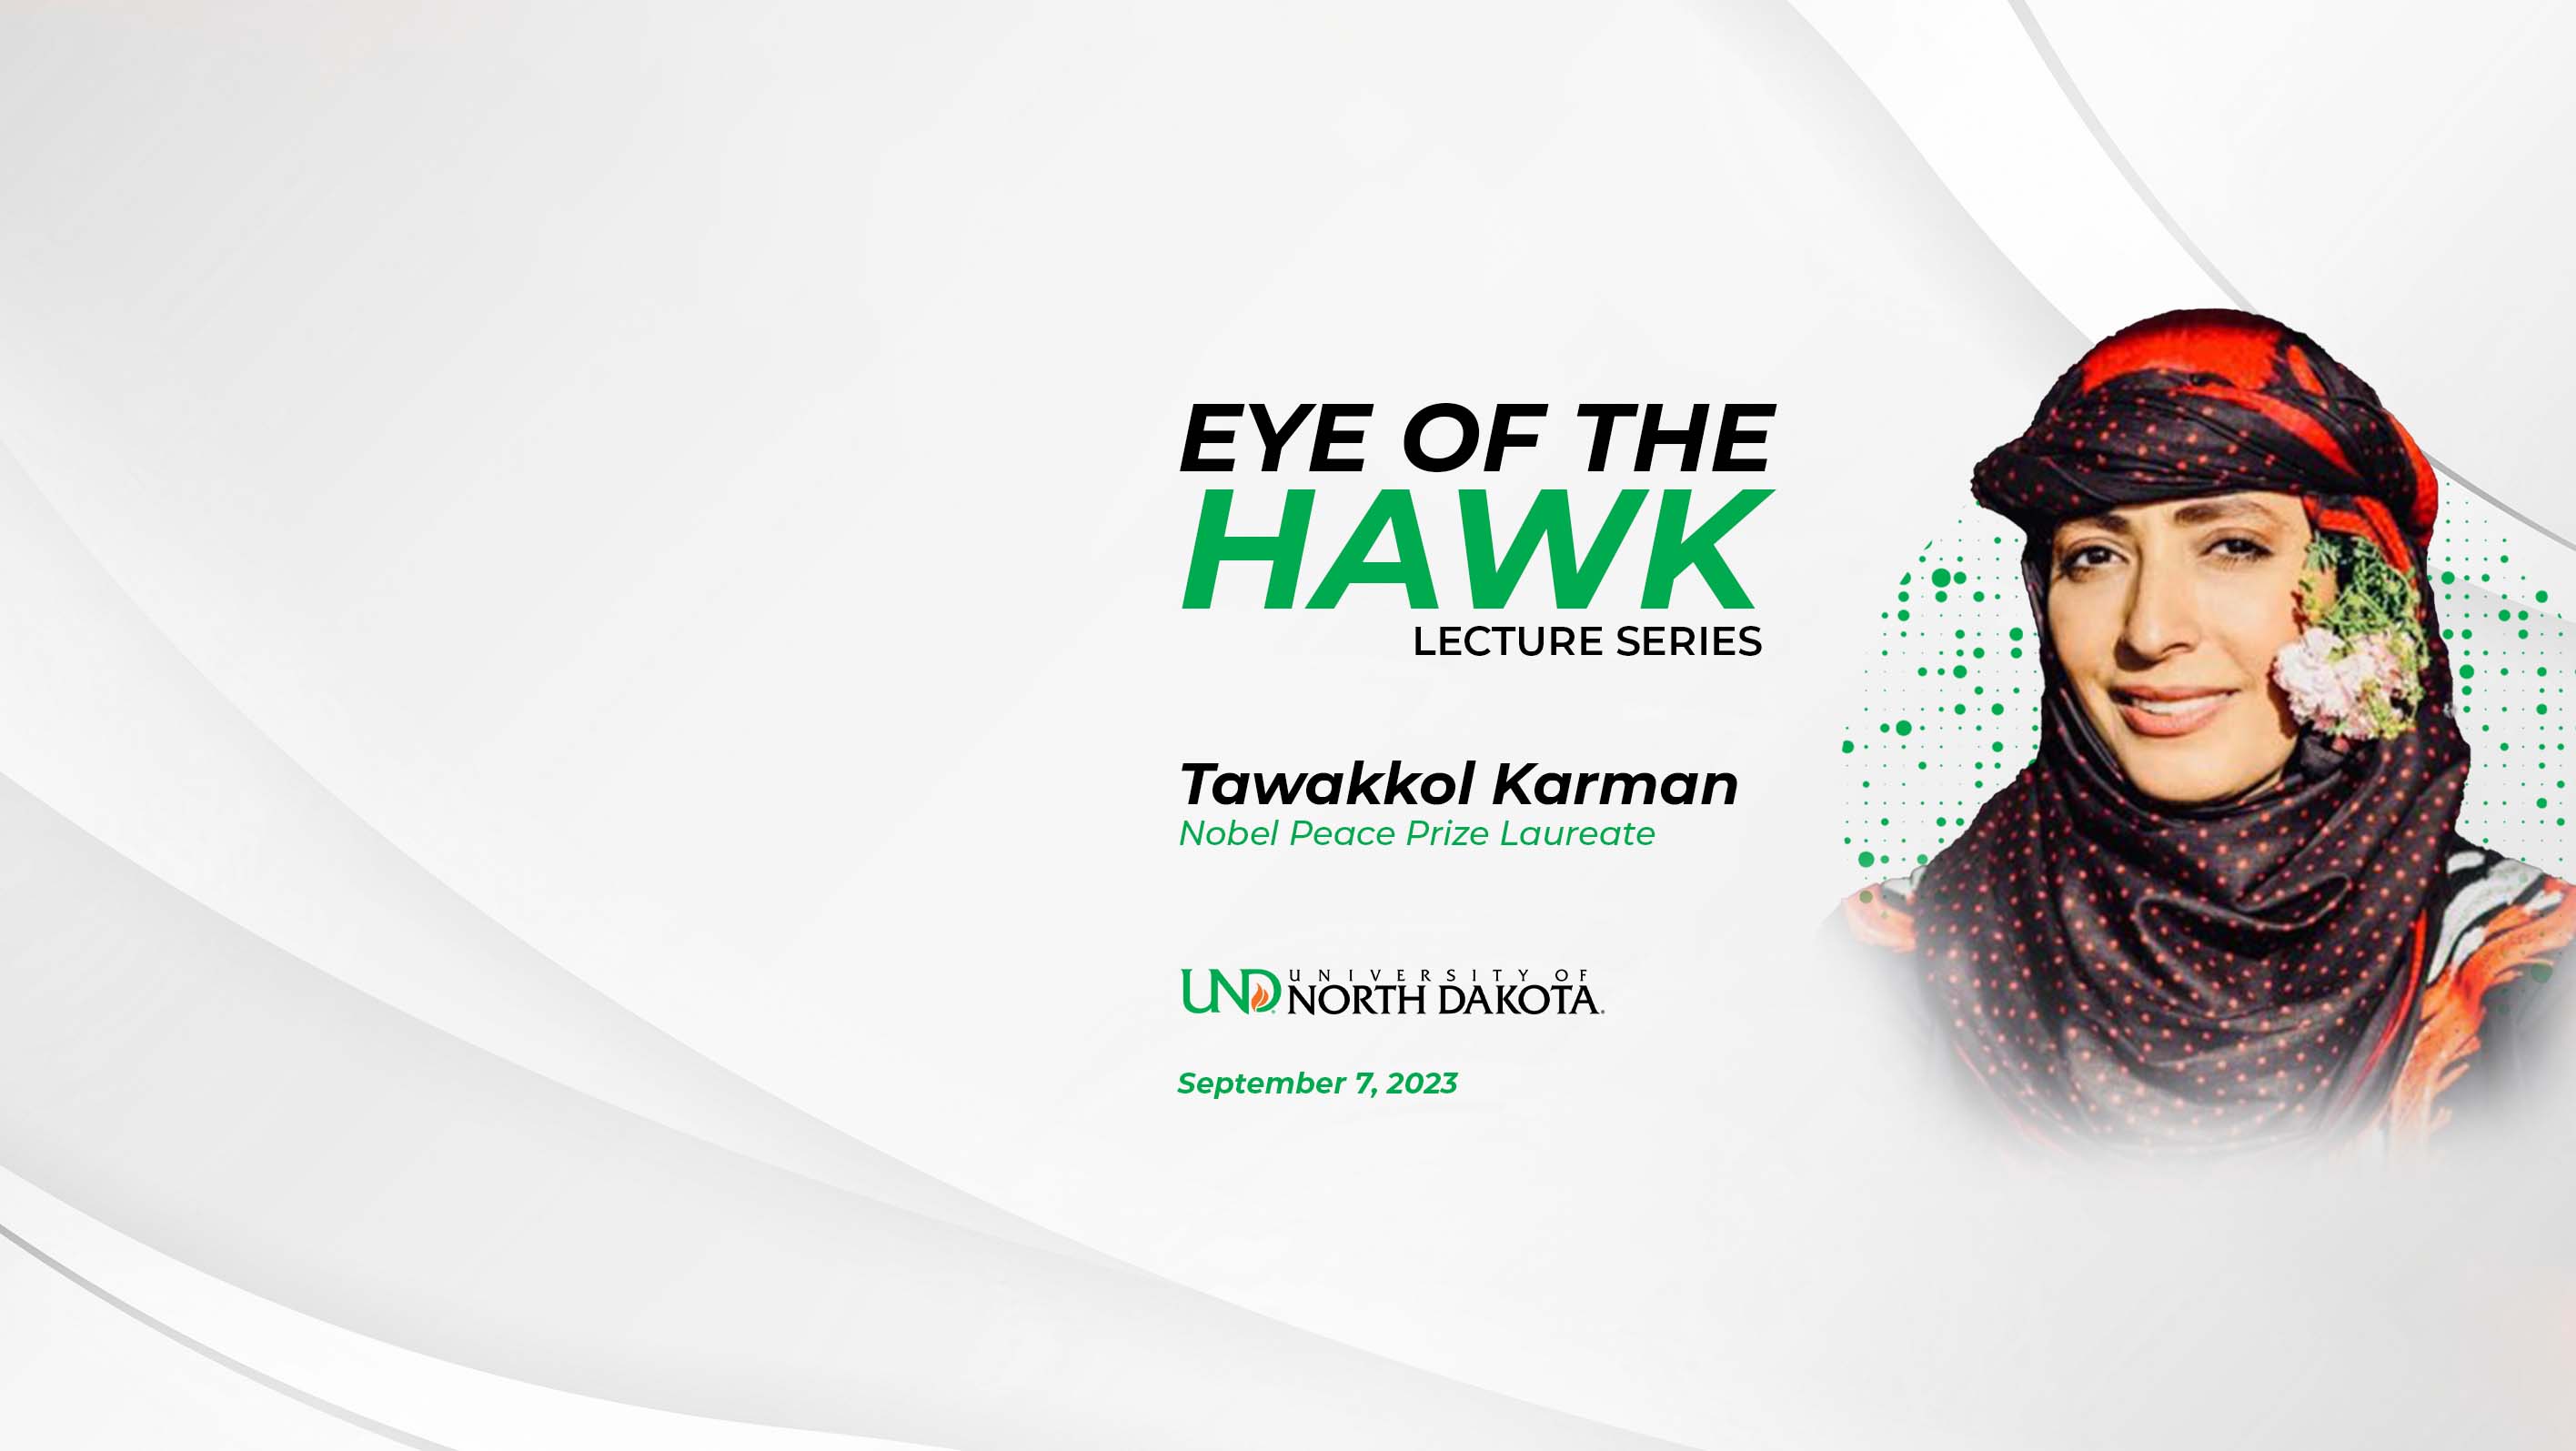 Tawakkol Karman to address tyranny and future of democracy at University of North Dakota 